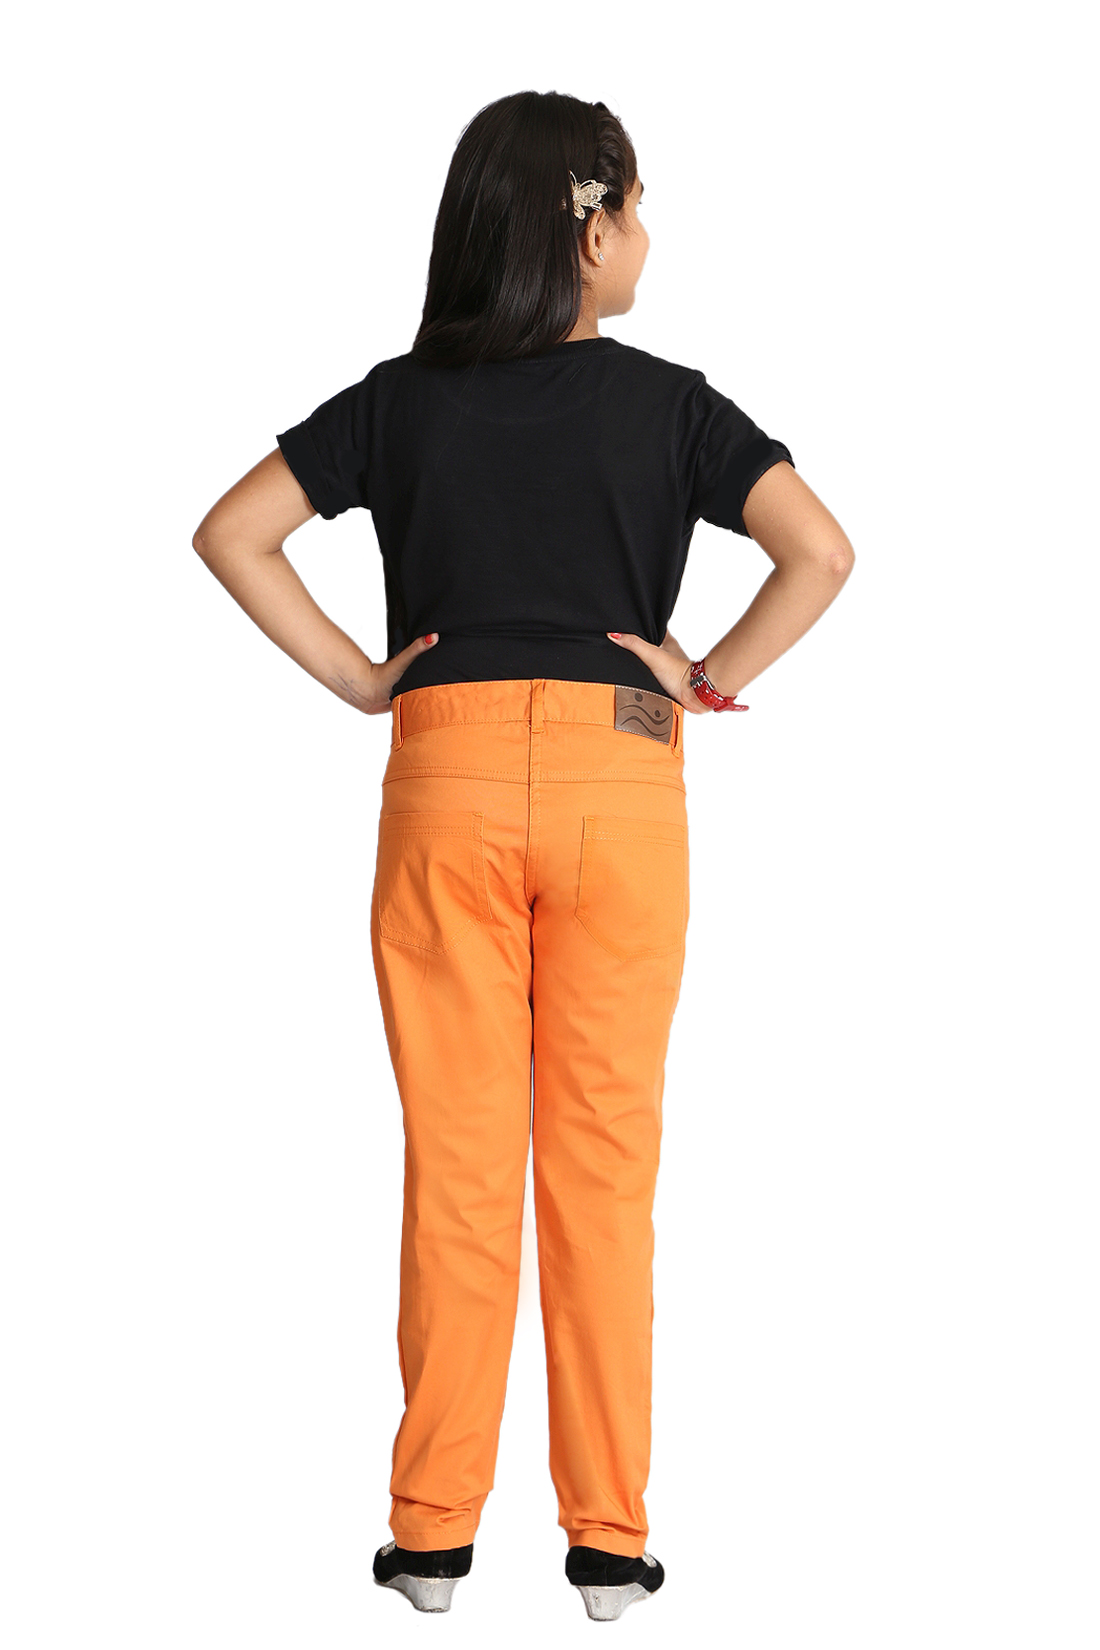 MINC Petite - Buy Sweet Pea Girls Trousers in Brown Cotton Linen Online